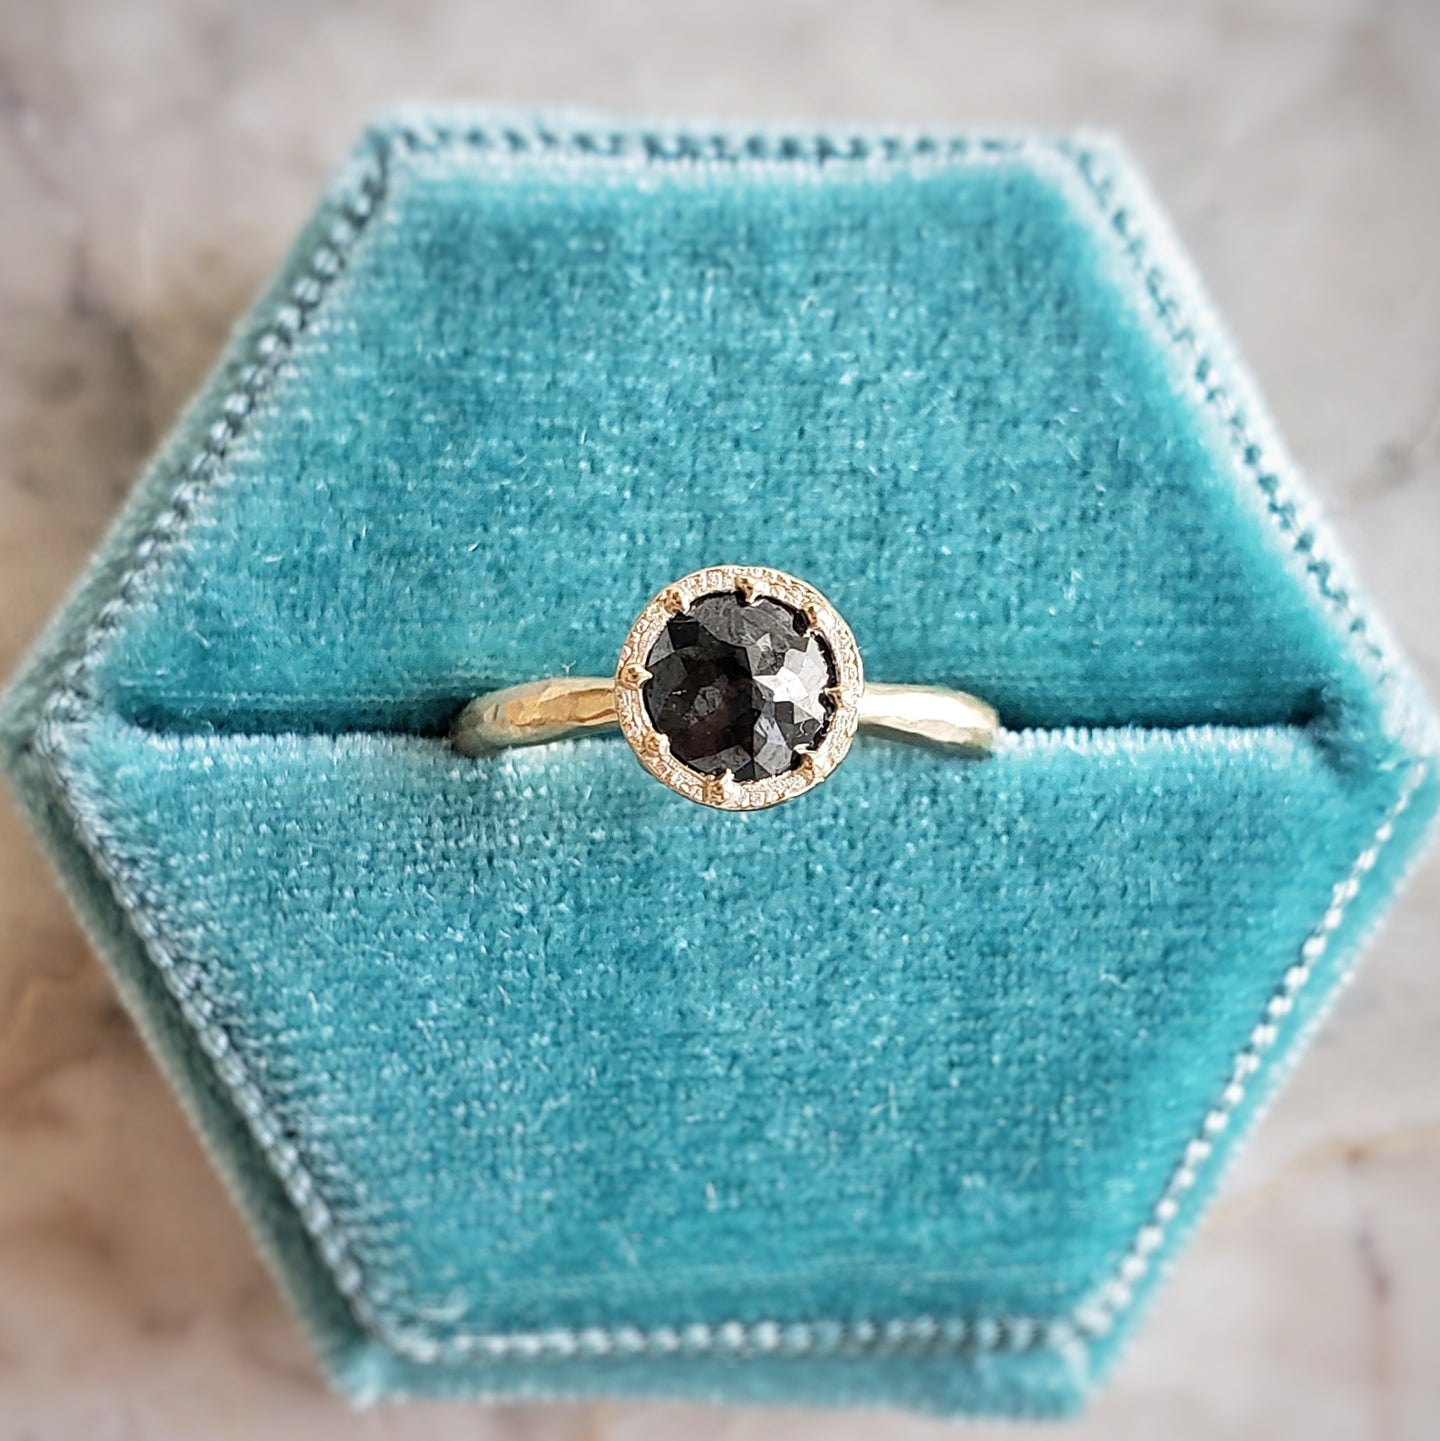 Beaded Tulip Ring, Black Diamond, 10k Yellow Gold, Size 6.5